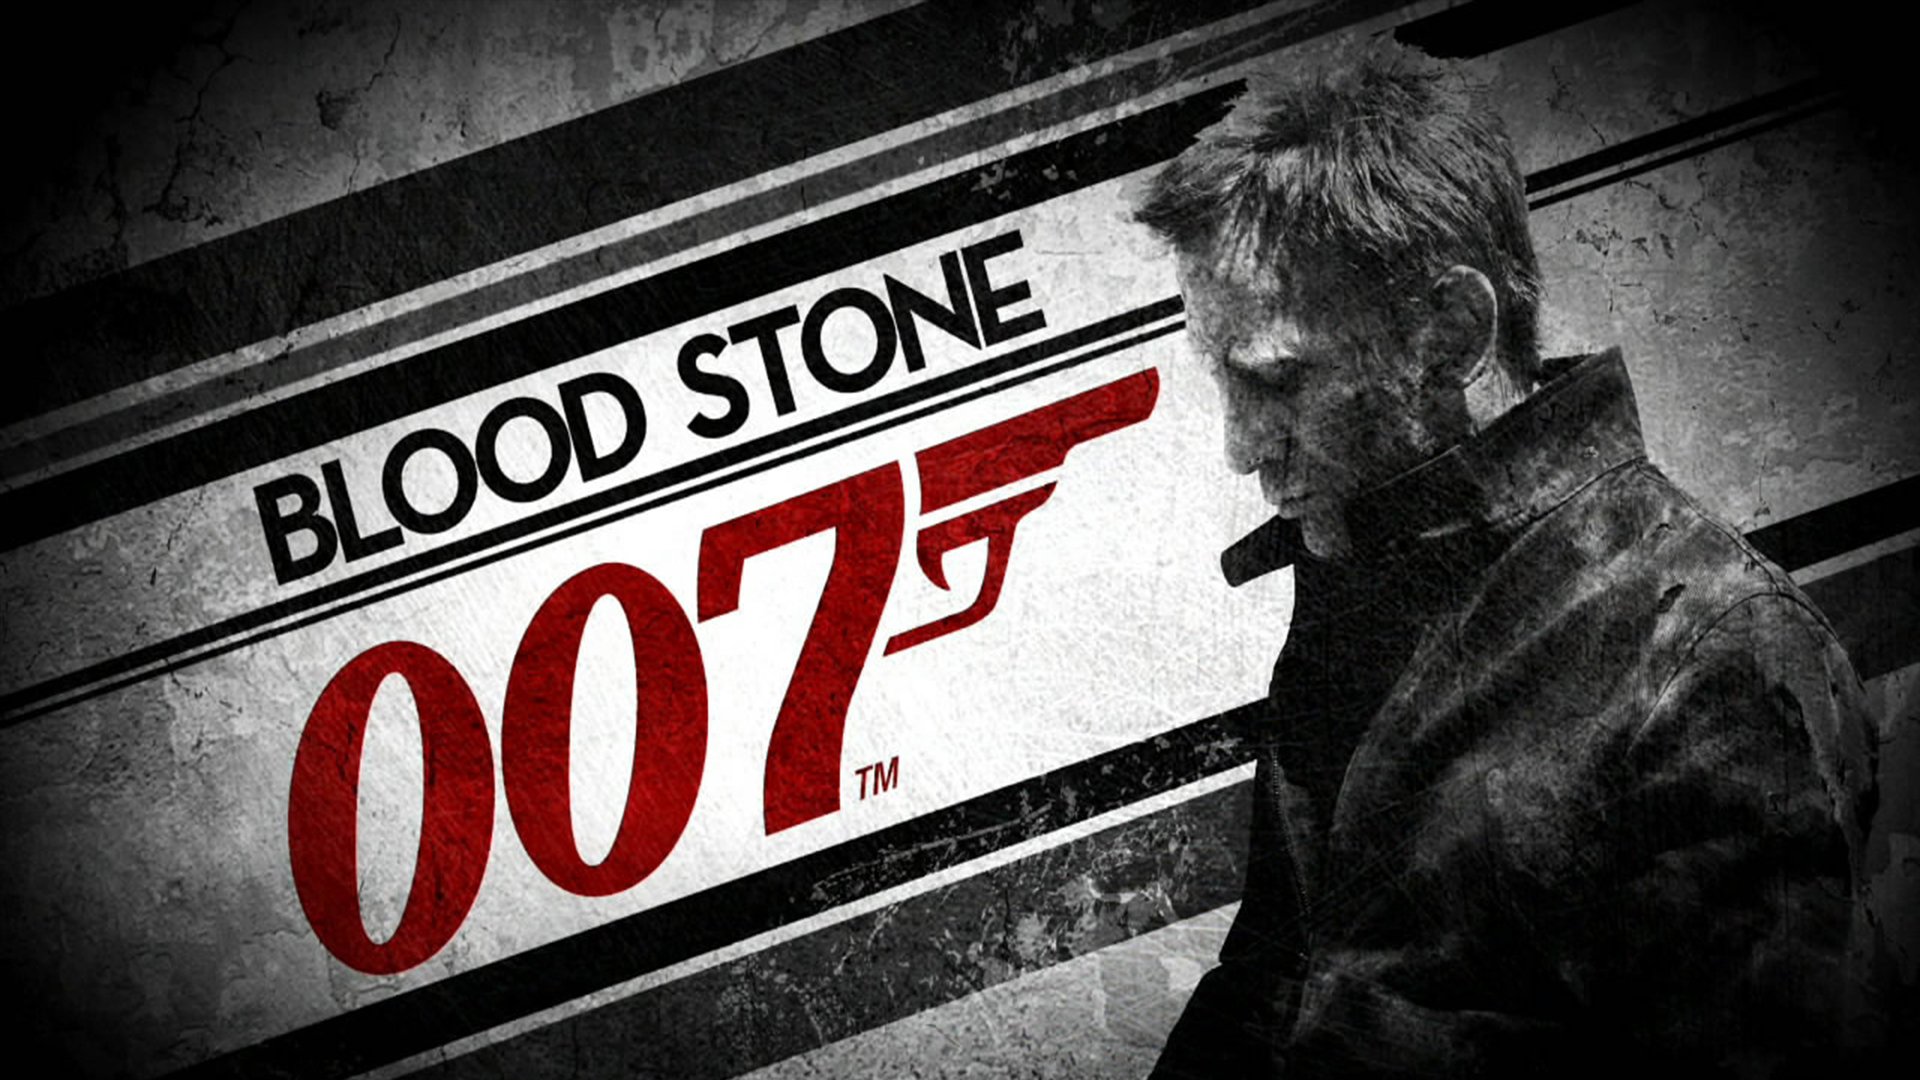 007 Blood Stone Game Pc 19x1080 Wallpaper Teahub Io